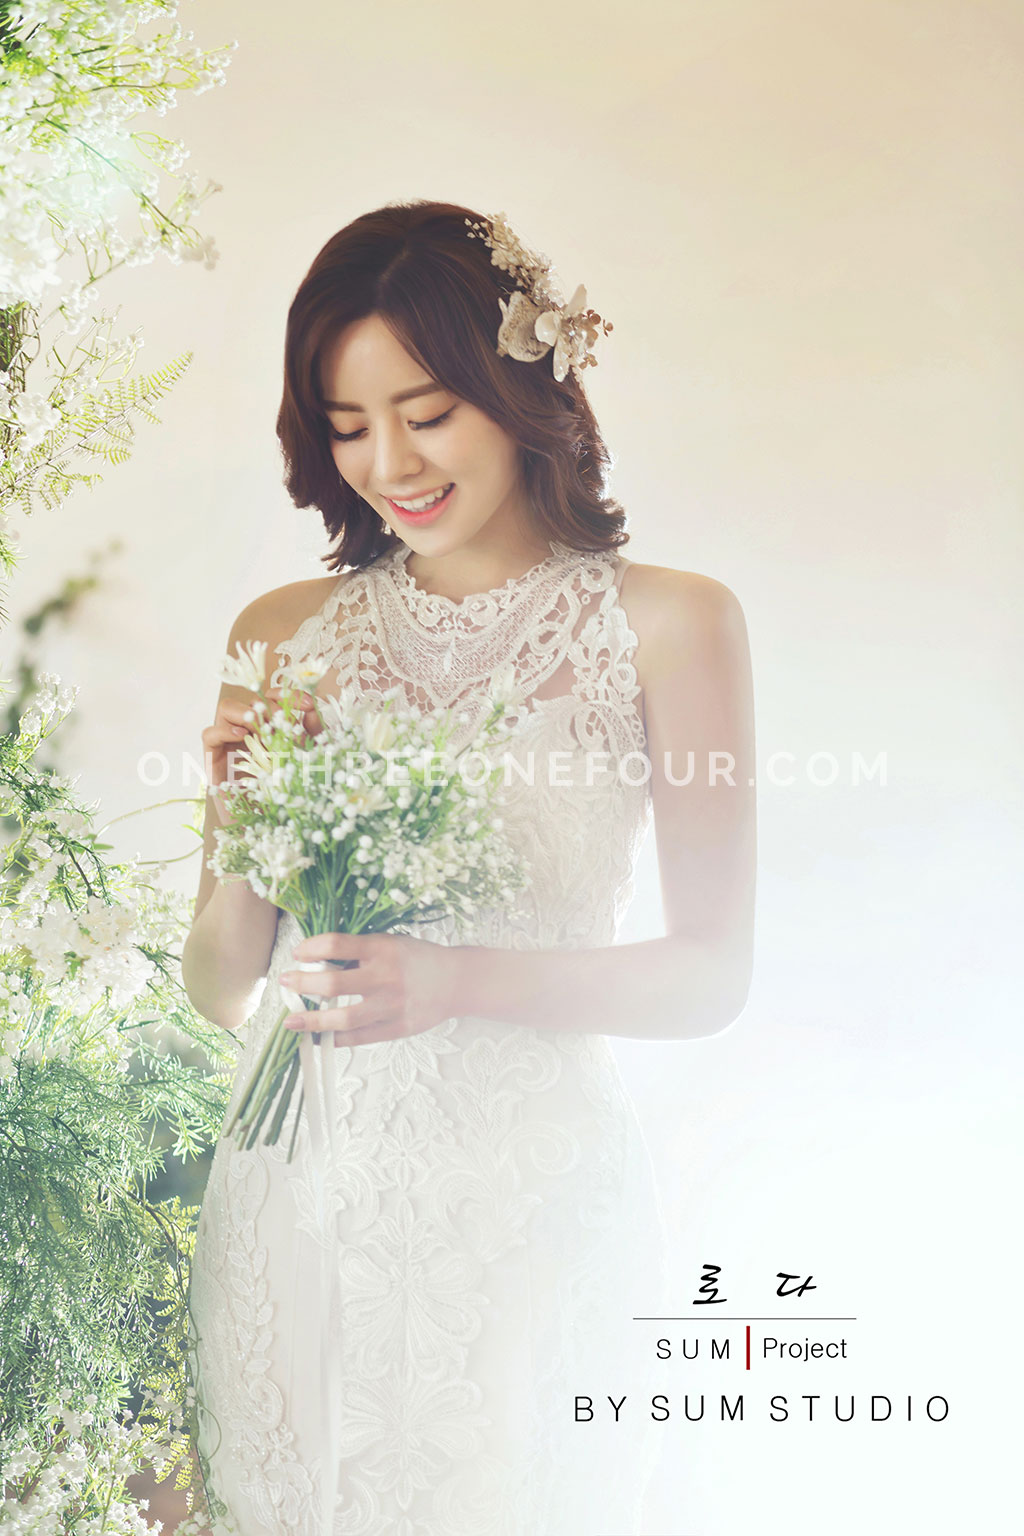 Korean Wedding Photos: Indoor Set (NEW) by SUM Studio on OneThreeOneFour 34